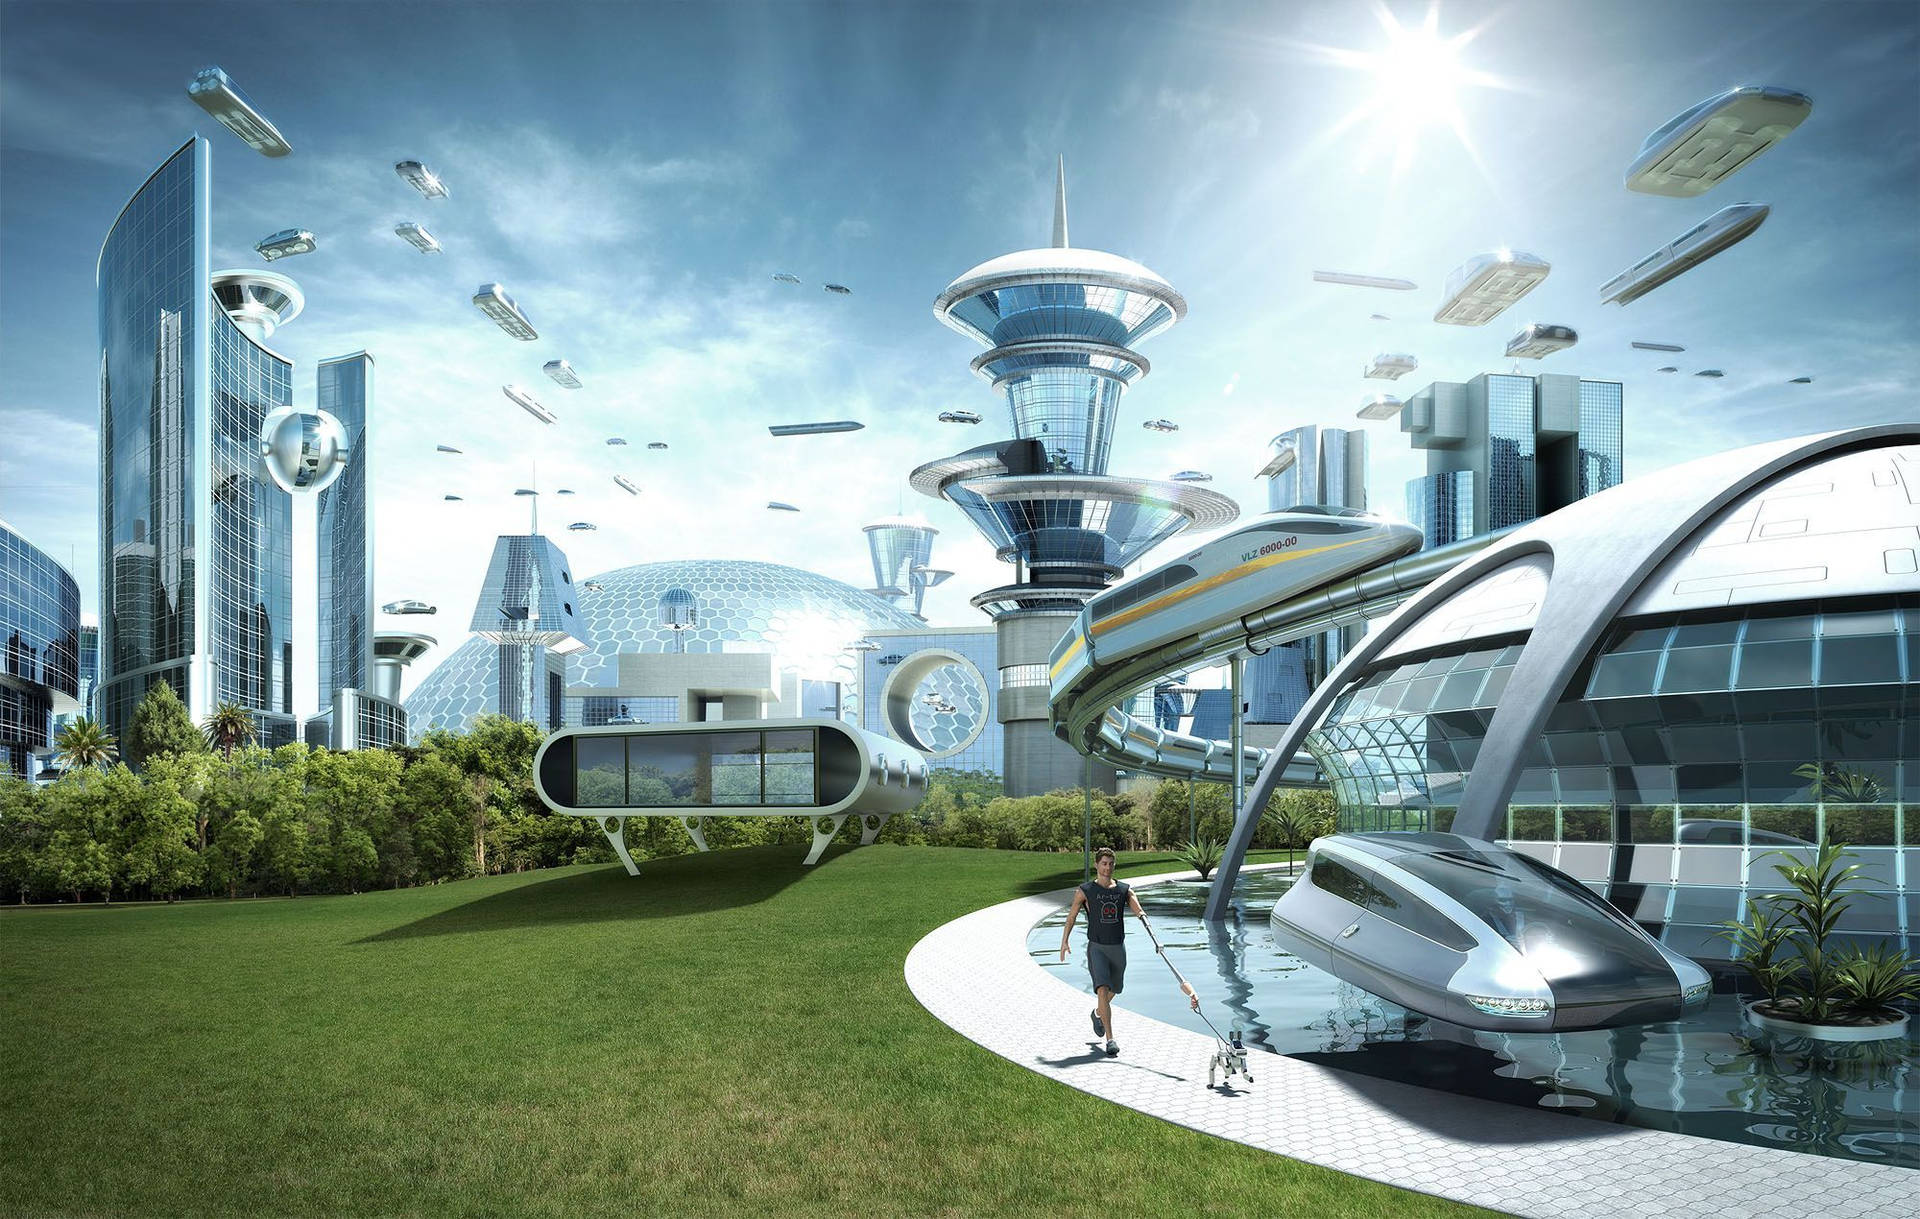 Science Fiction Futuristic City